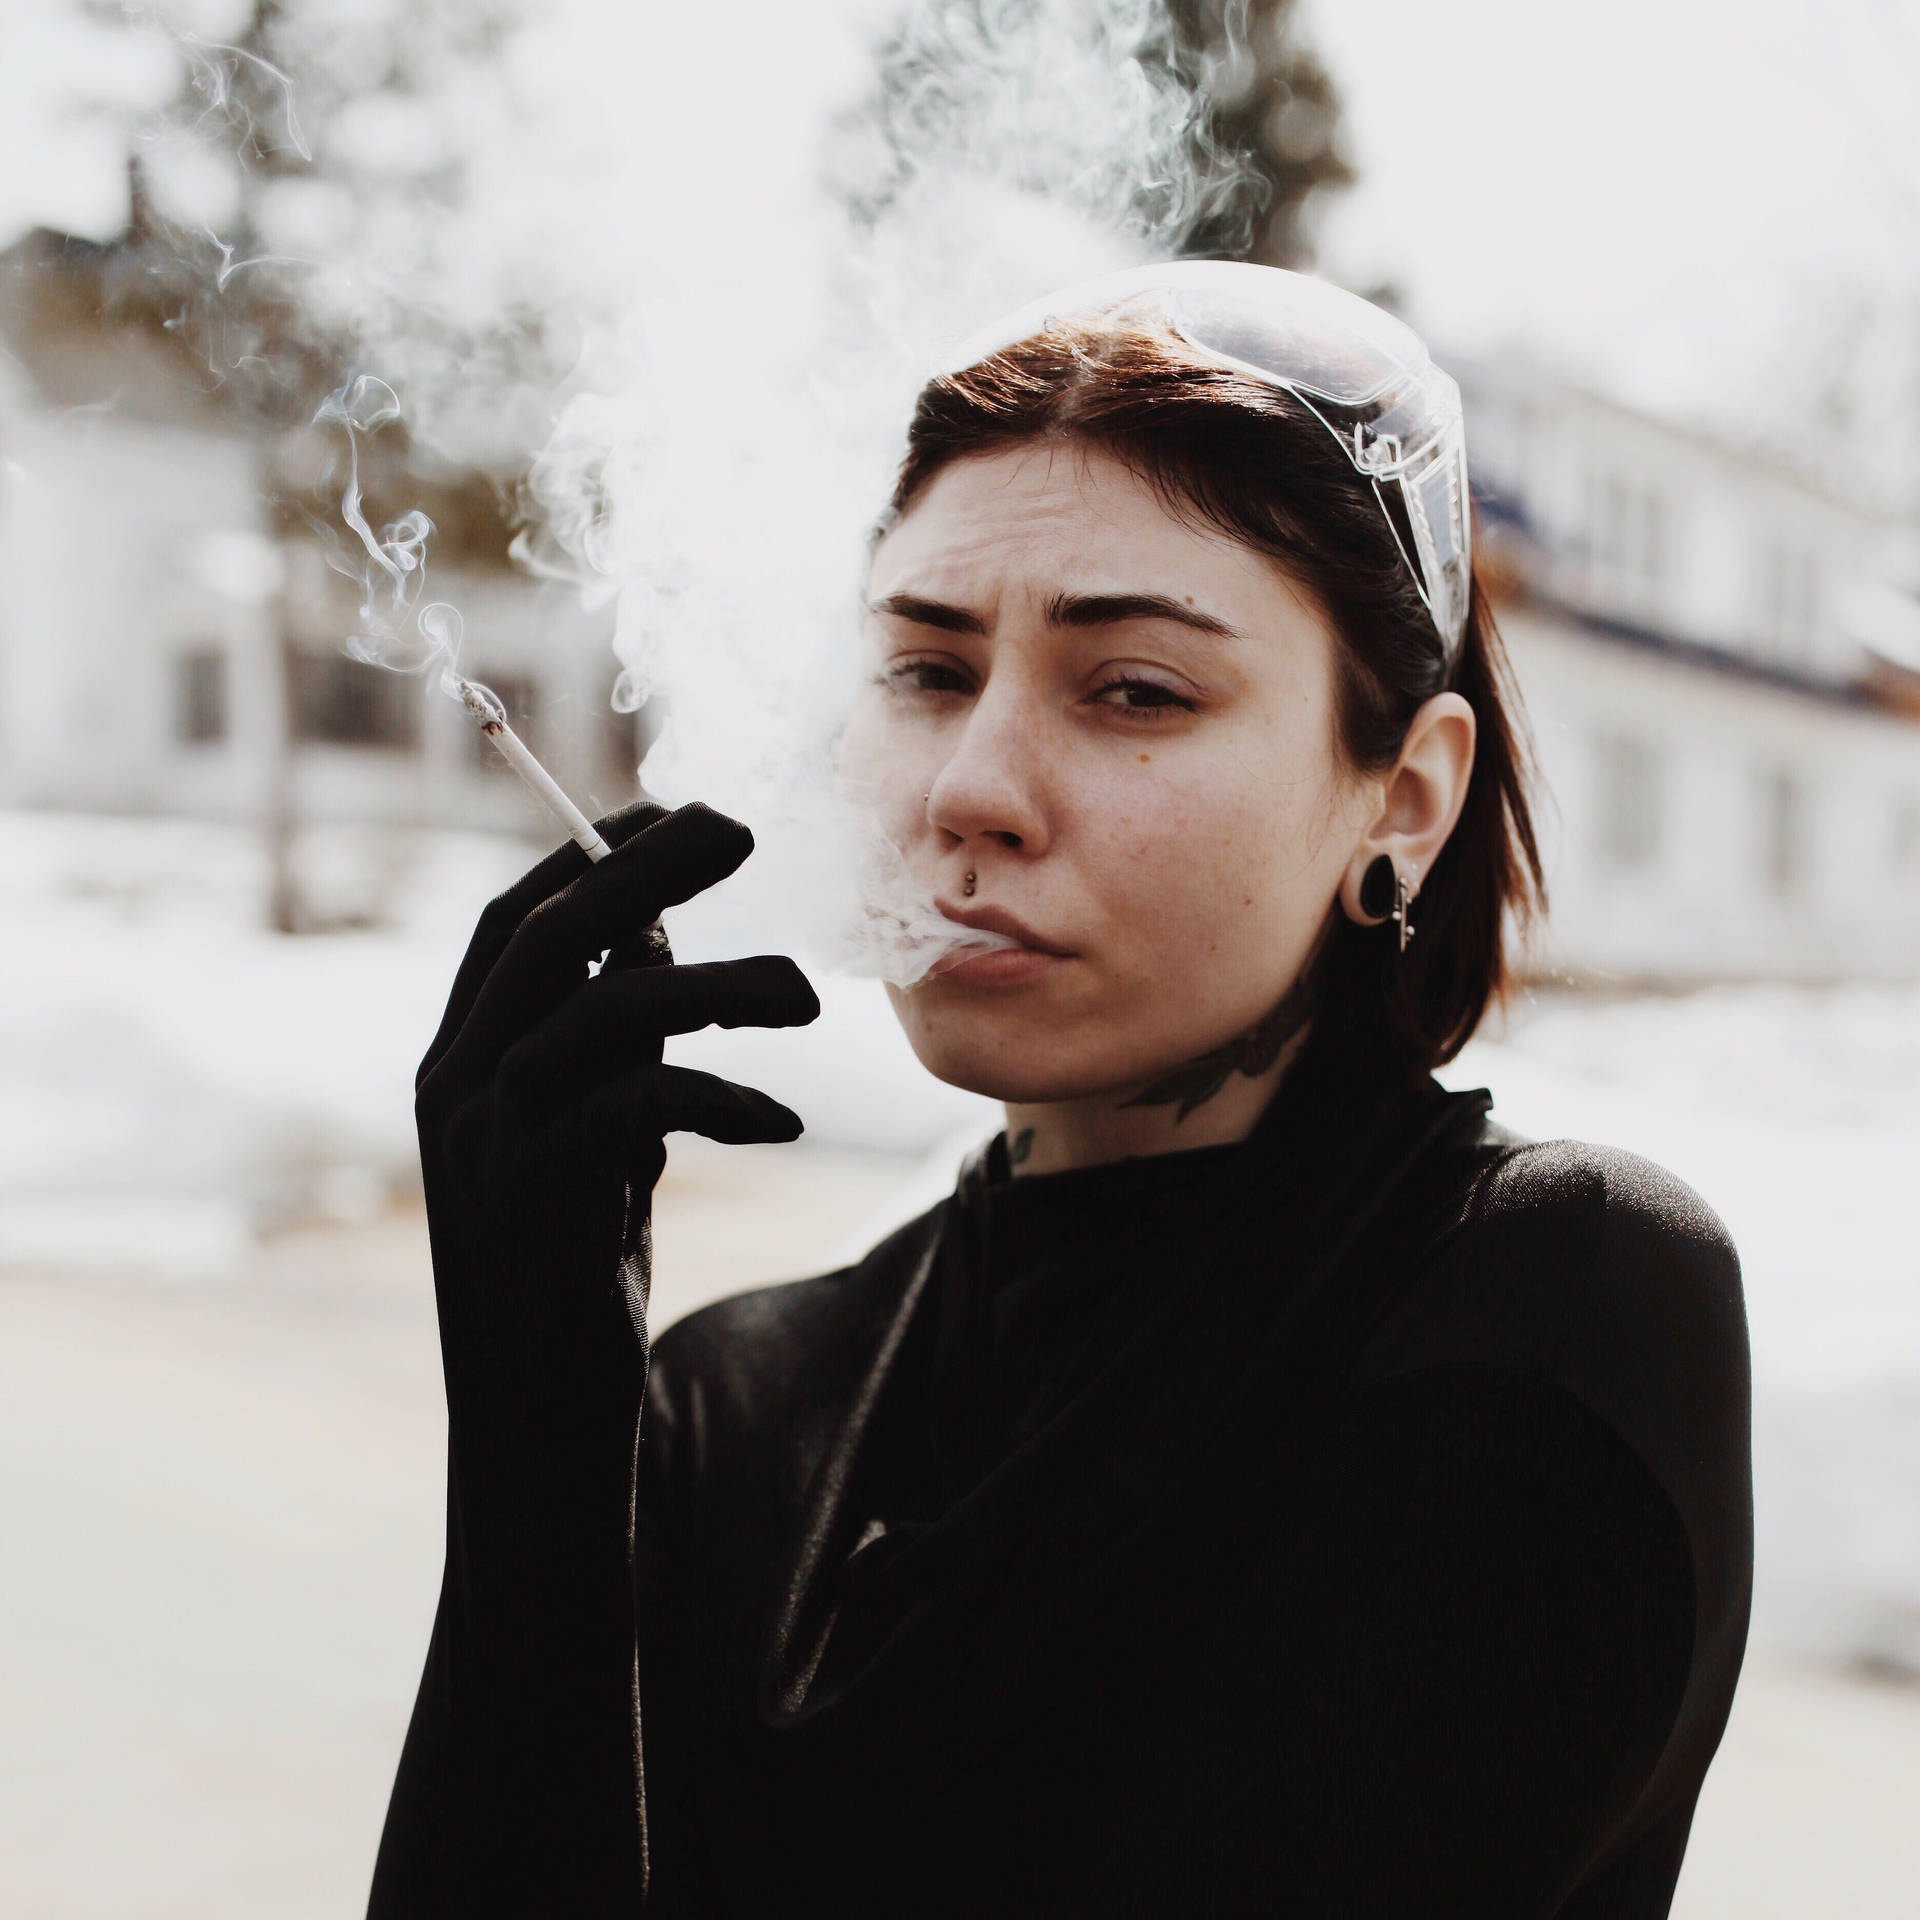 Woman In Black Smoking Background